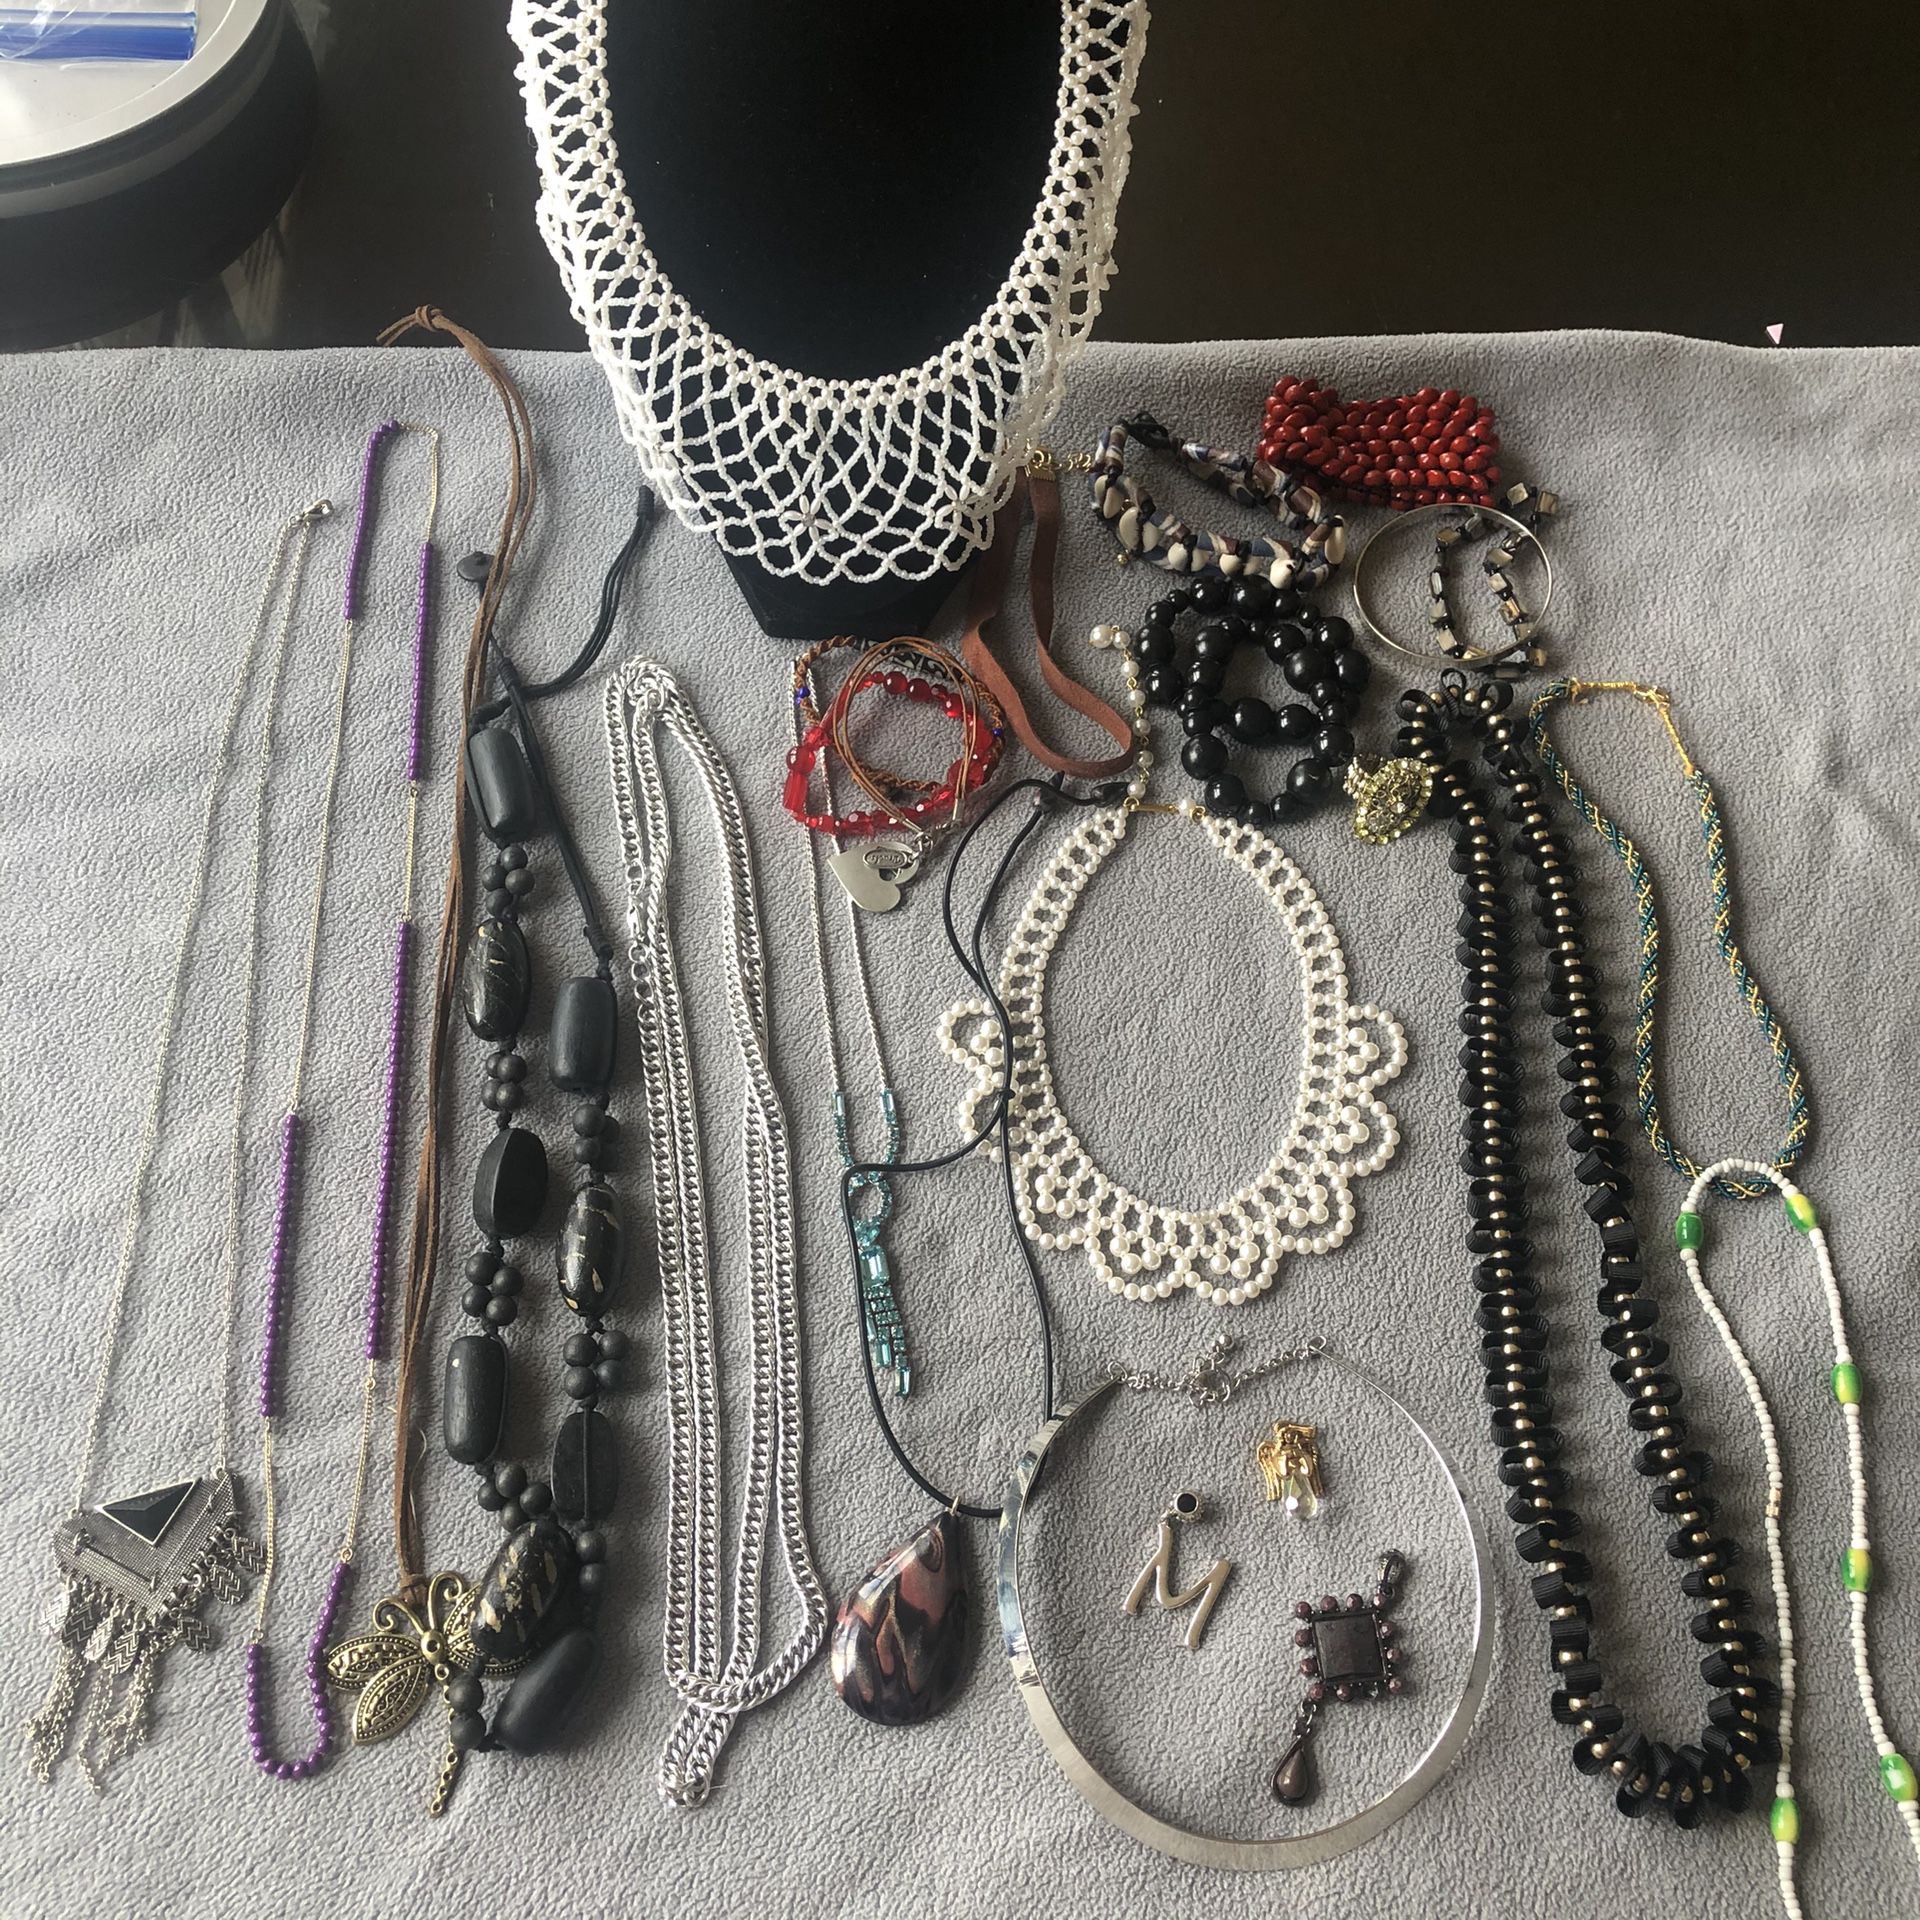 Necklace and bracelet Jewelry lot